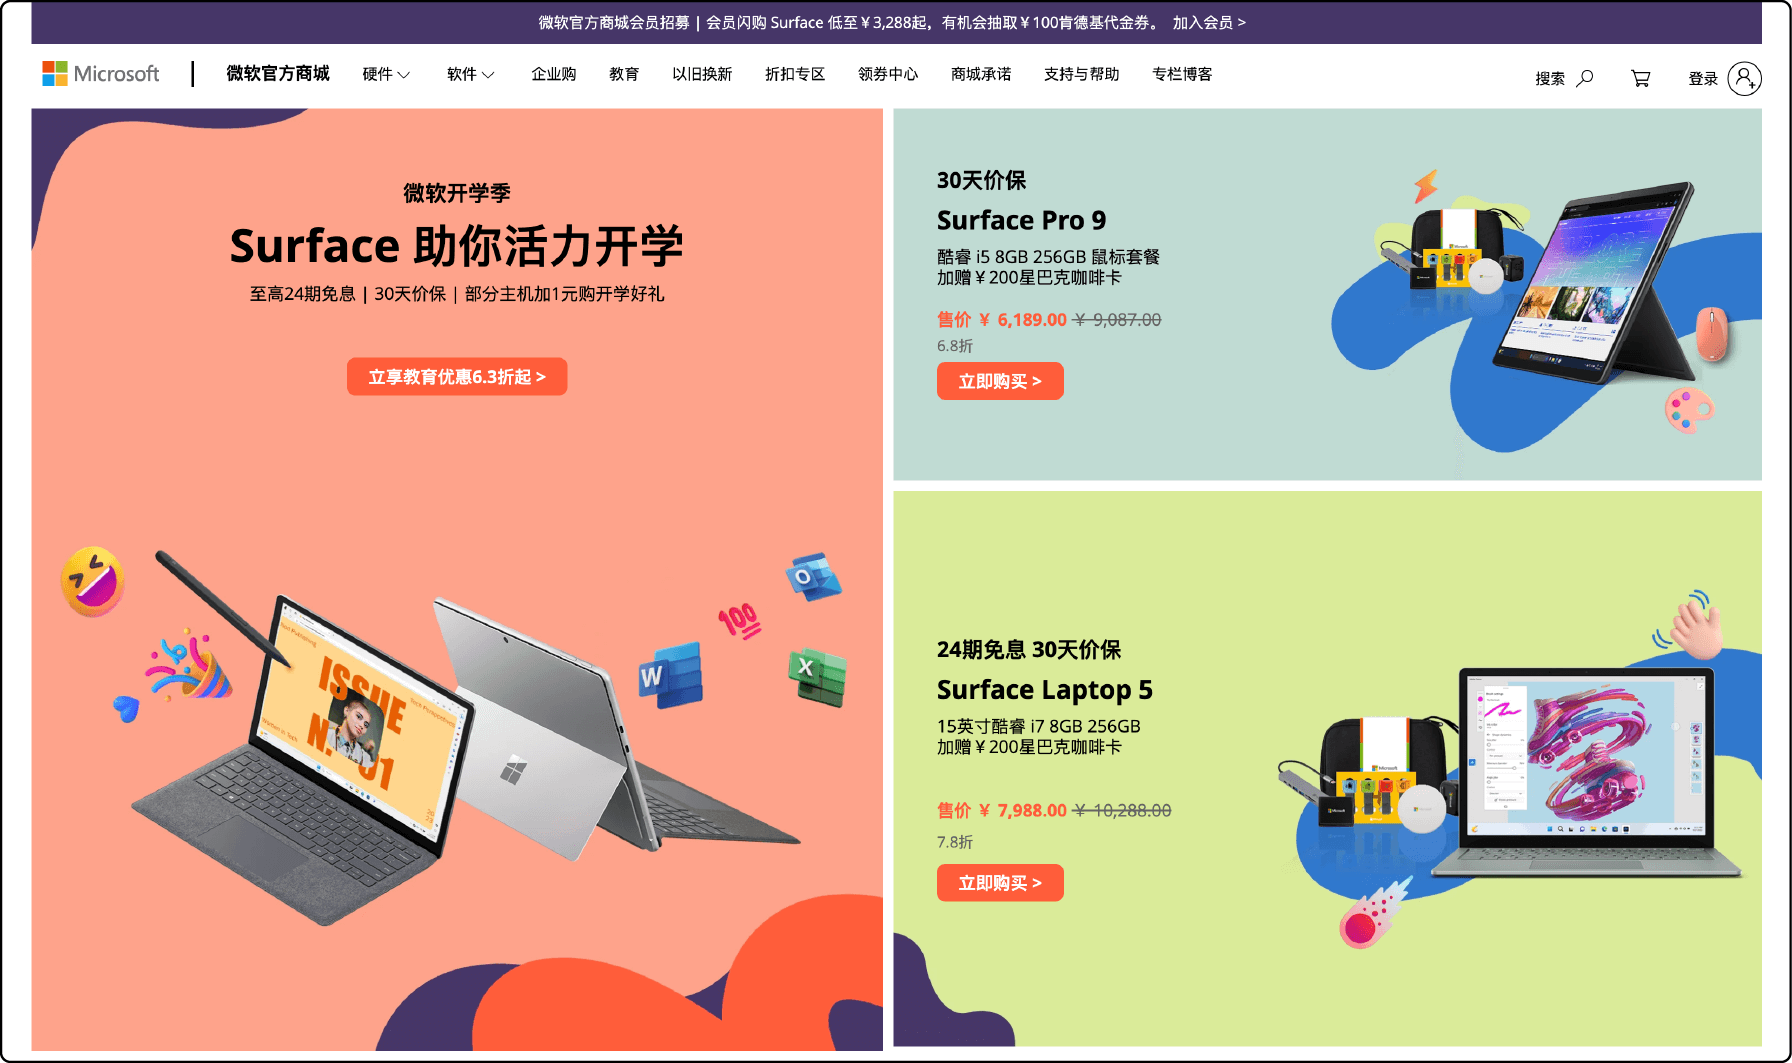 Magento Hosting Microsoft Store China